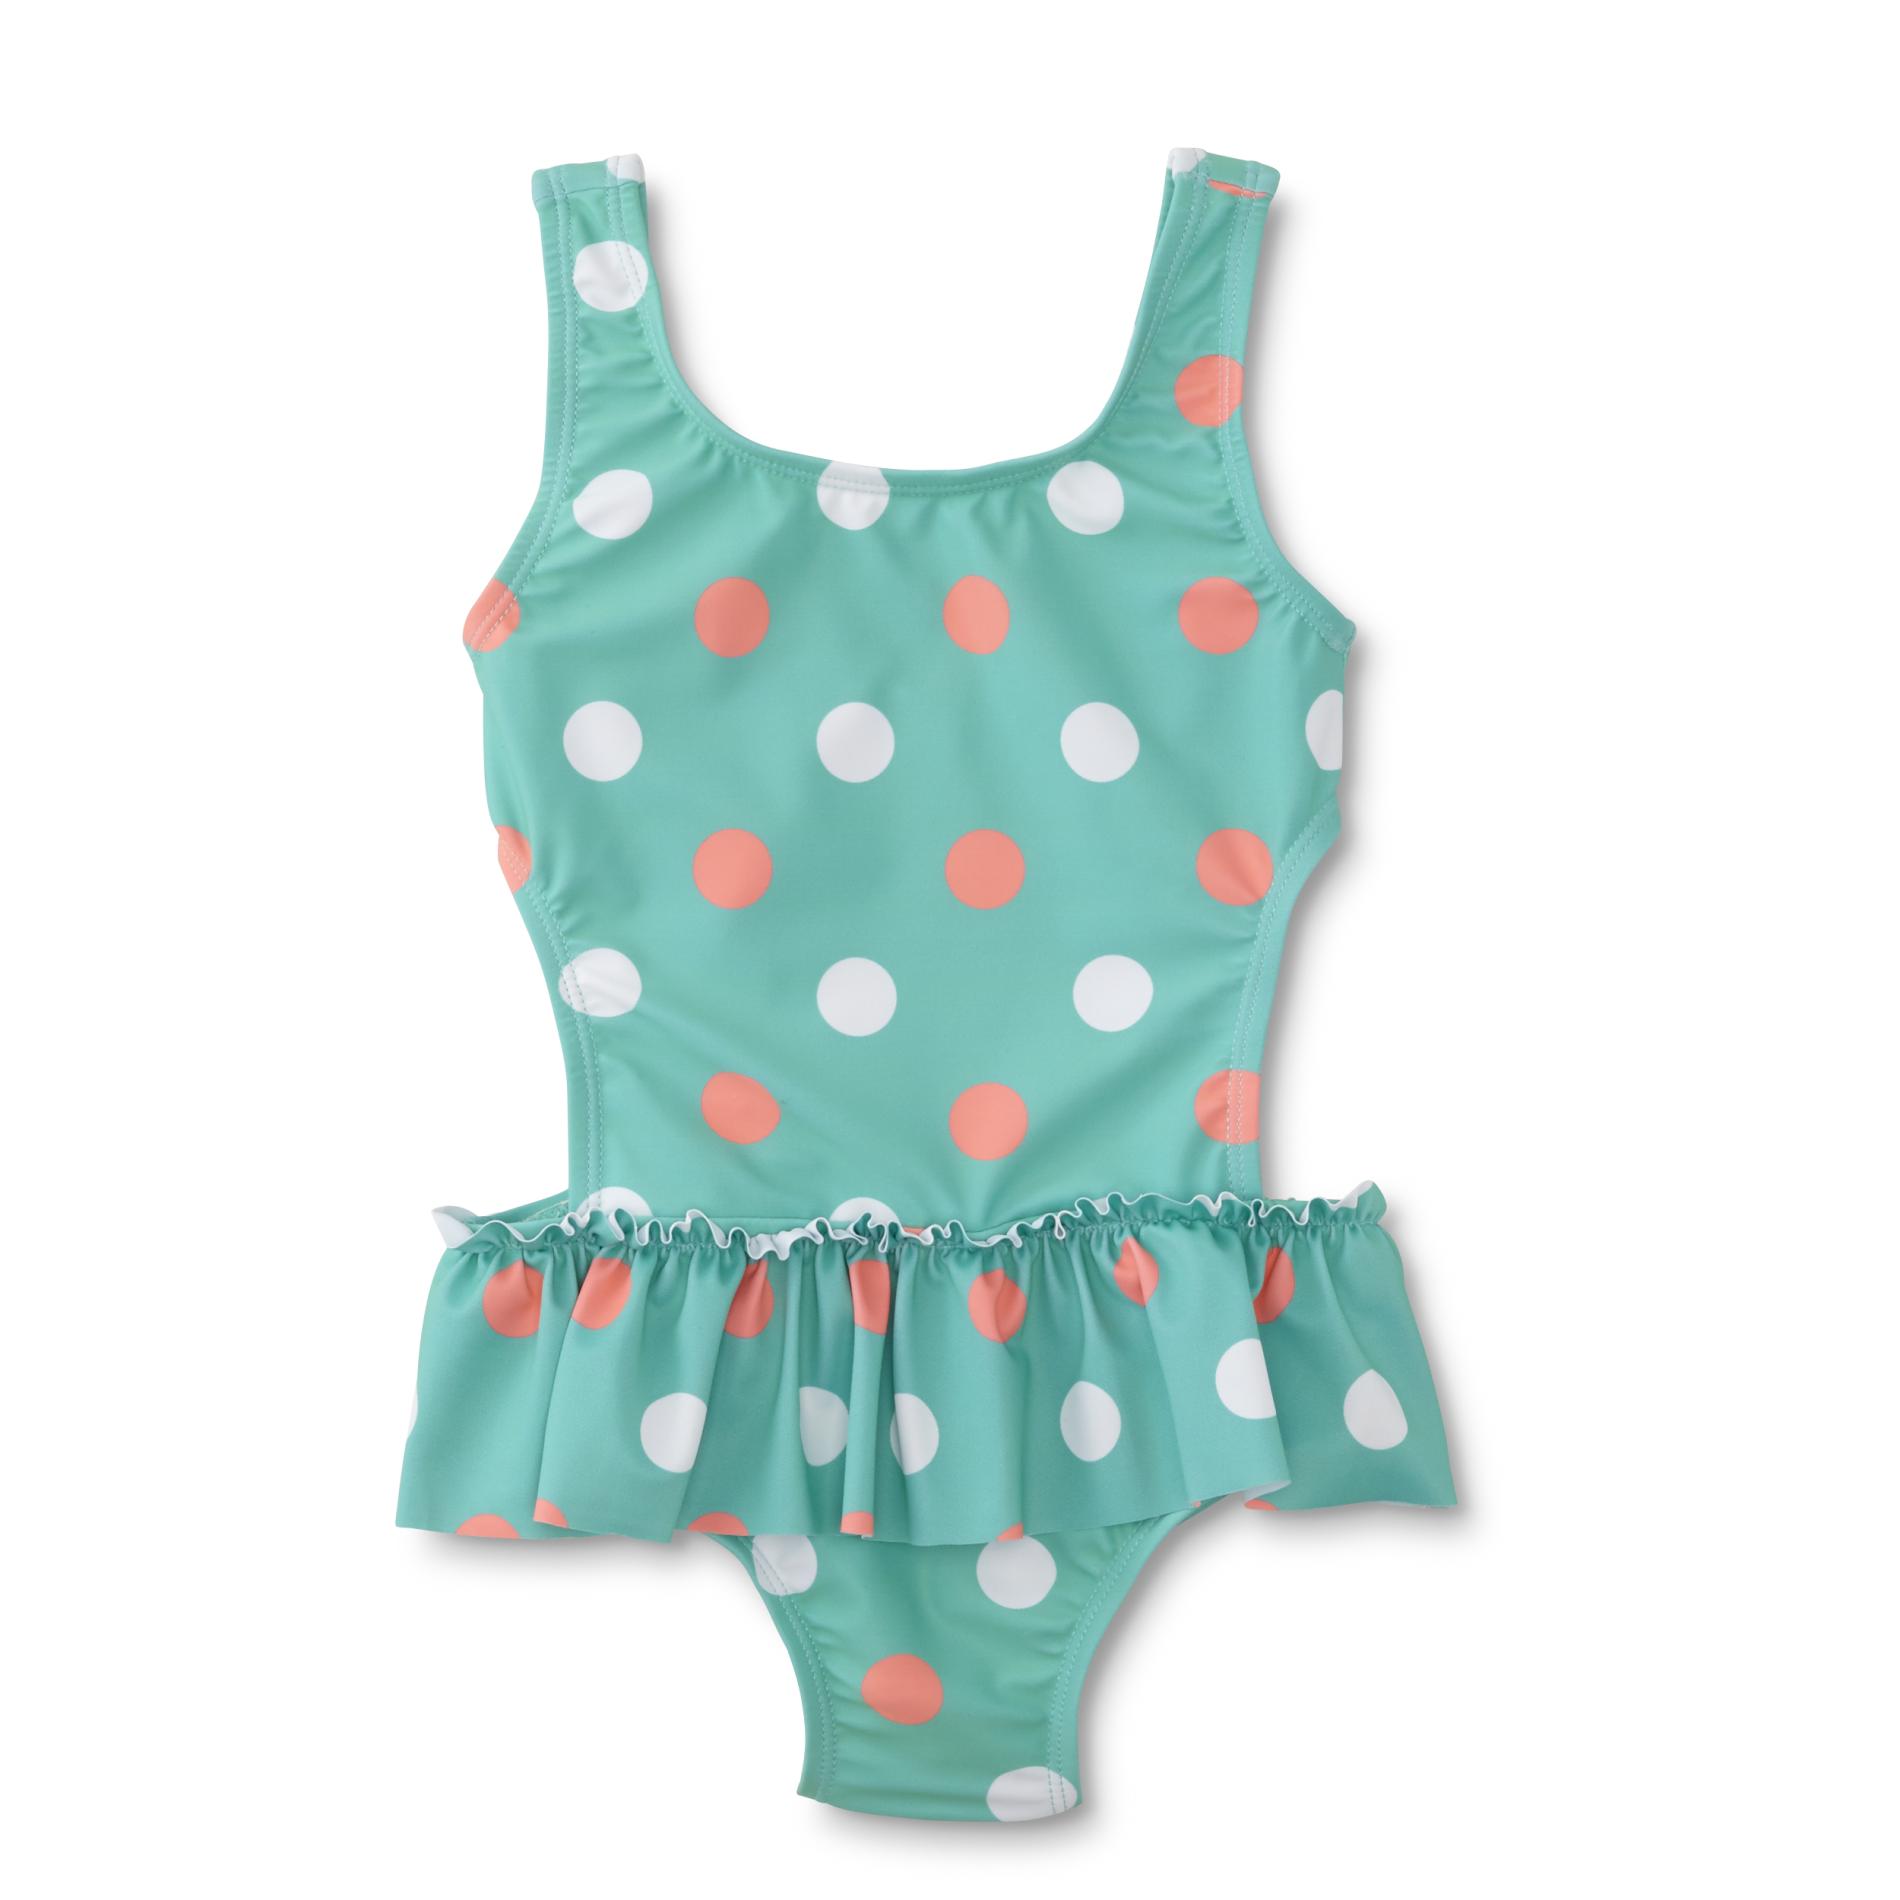 Toddler Girl's Swimsuit - Dots